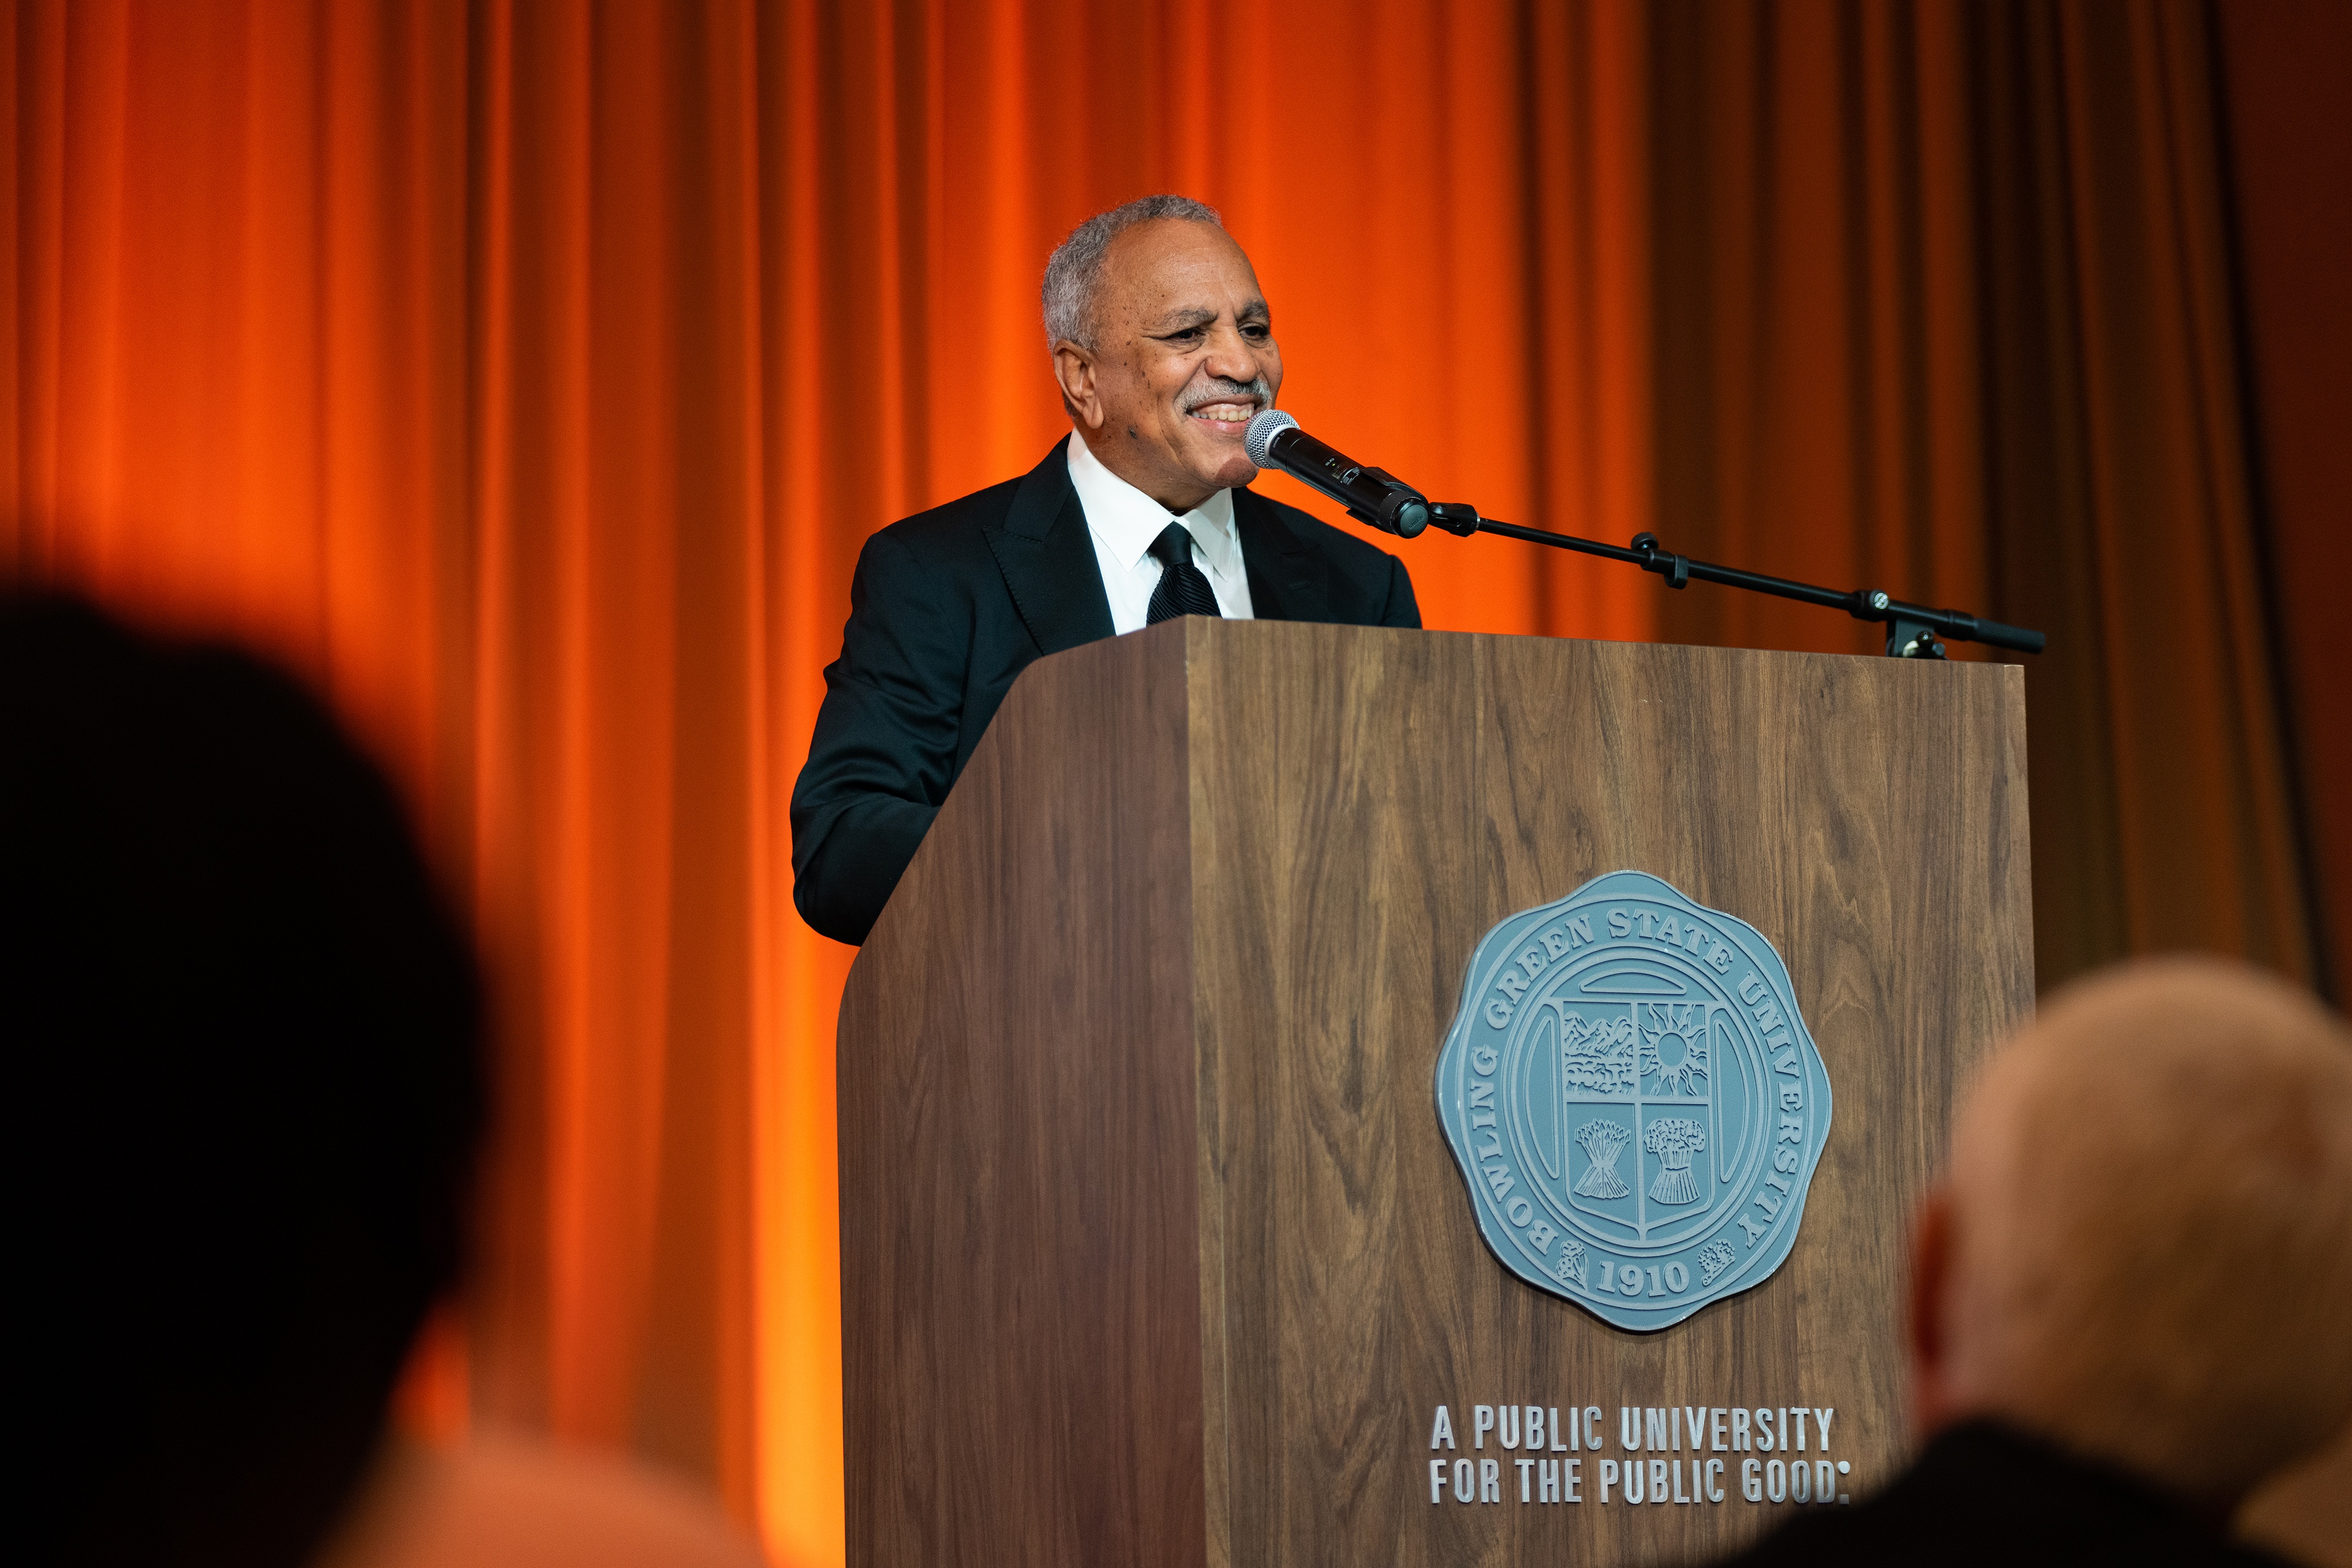 BGSU President Emeritus Dr. Sidney A. Ribeau speaks at the 25th anniversary celebration for the President's Leadership Academy. (BGSU photo)